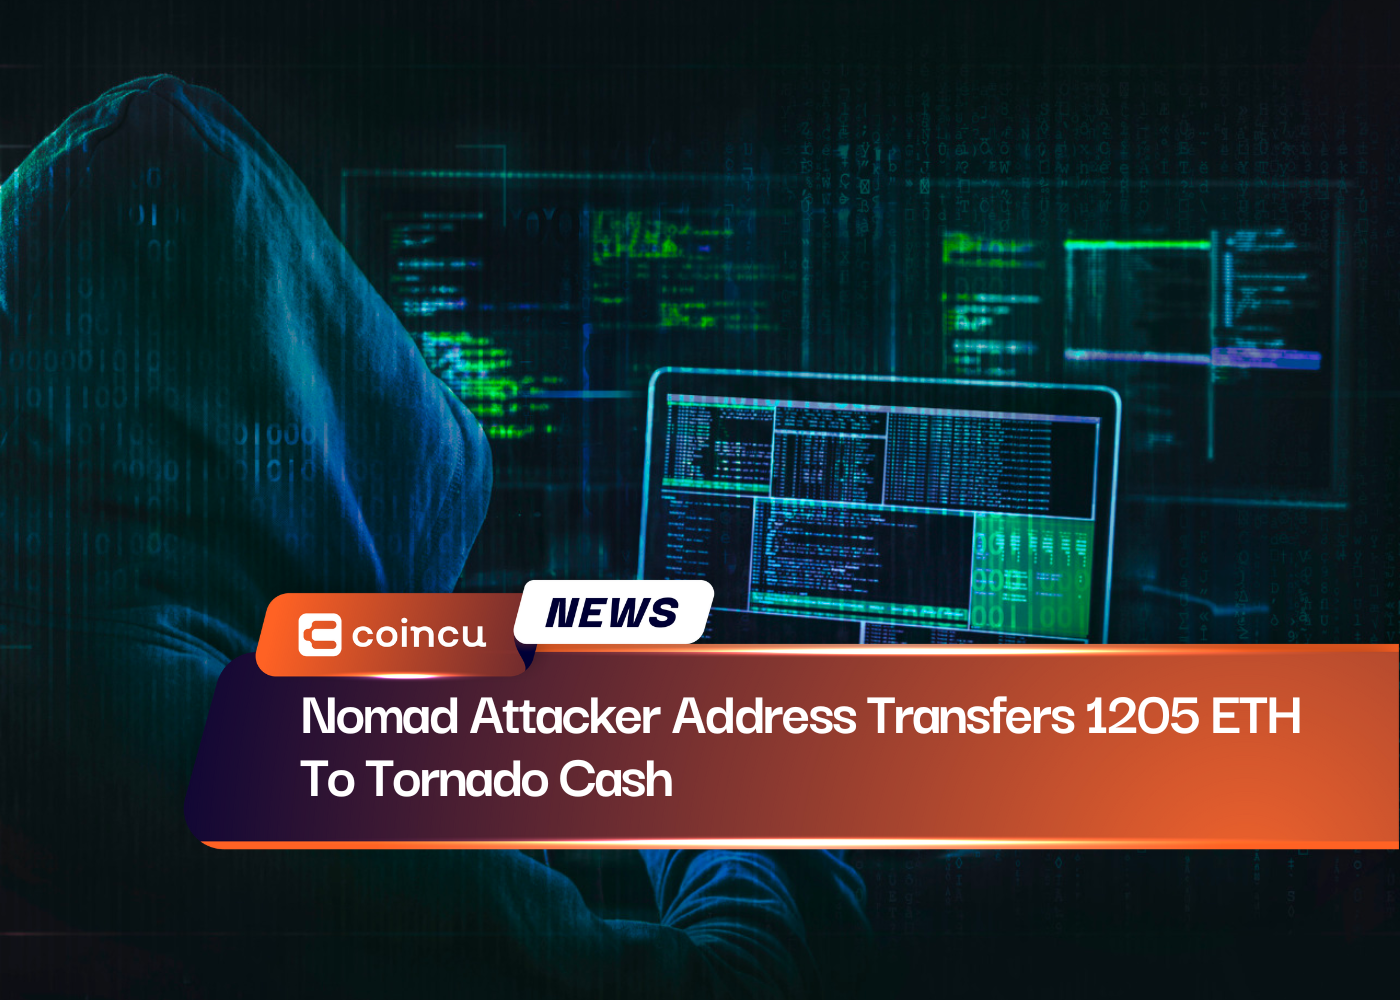 Nomad Attacker Address Transfers 1205 ETH To Tornado Cash